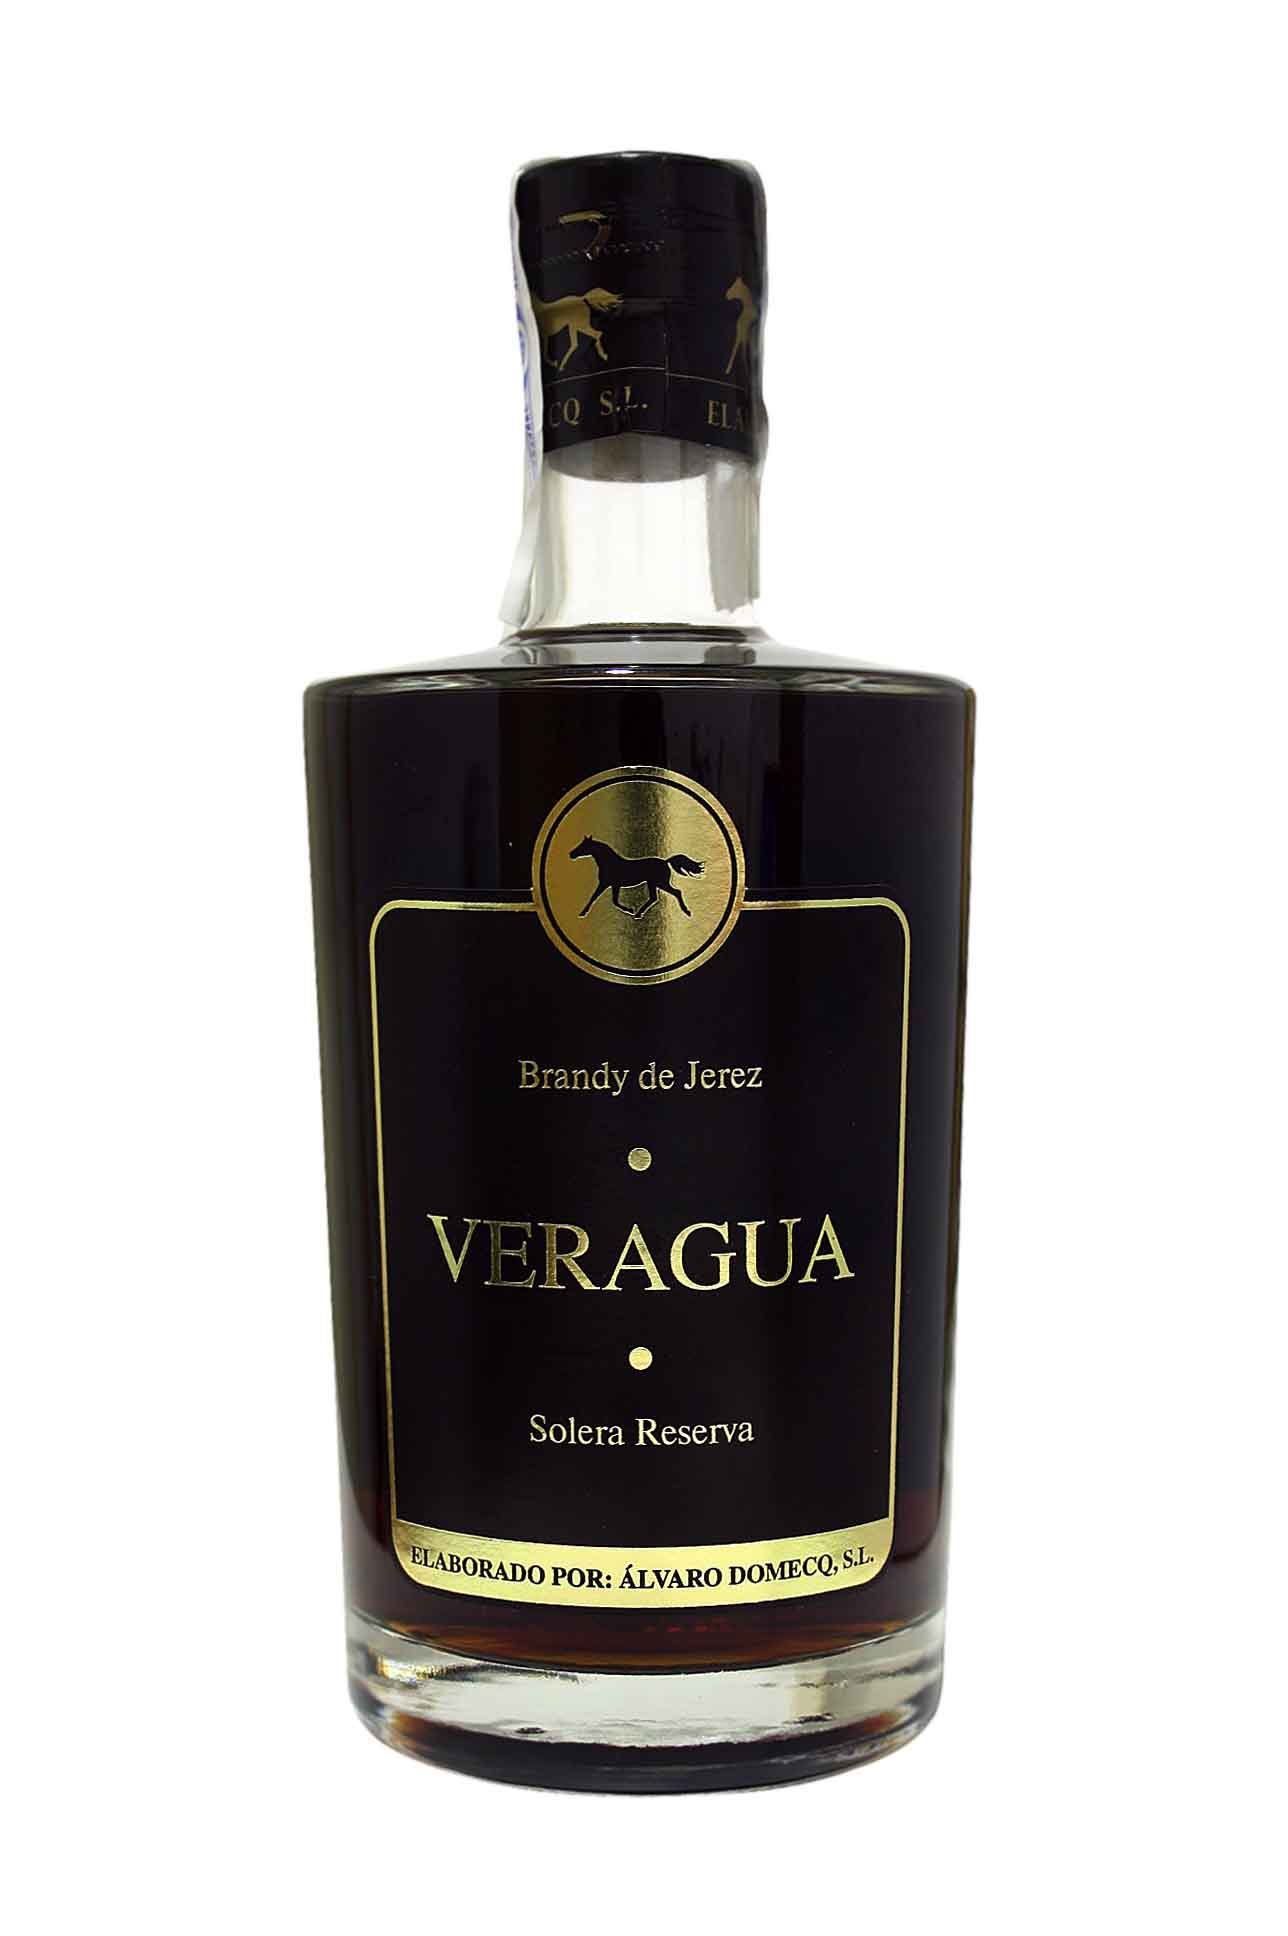 Veragua brandy